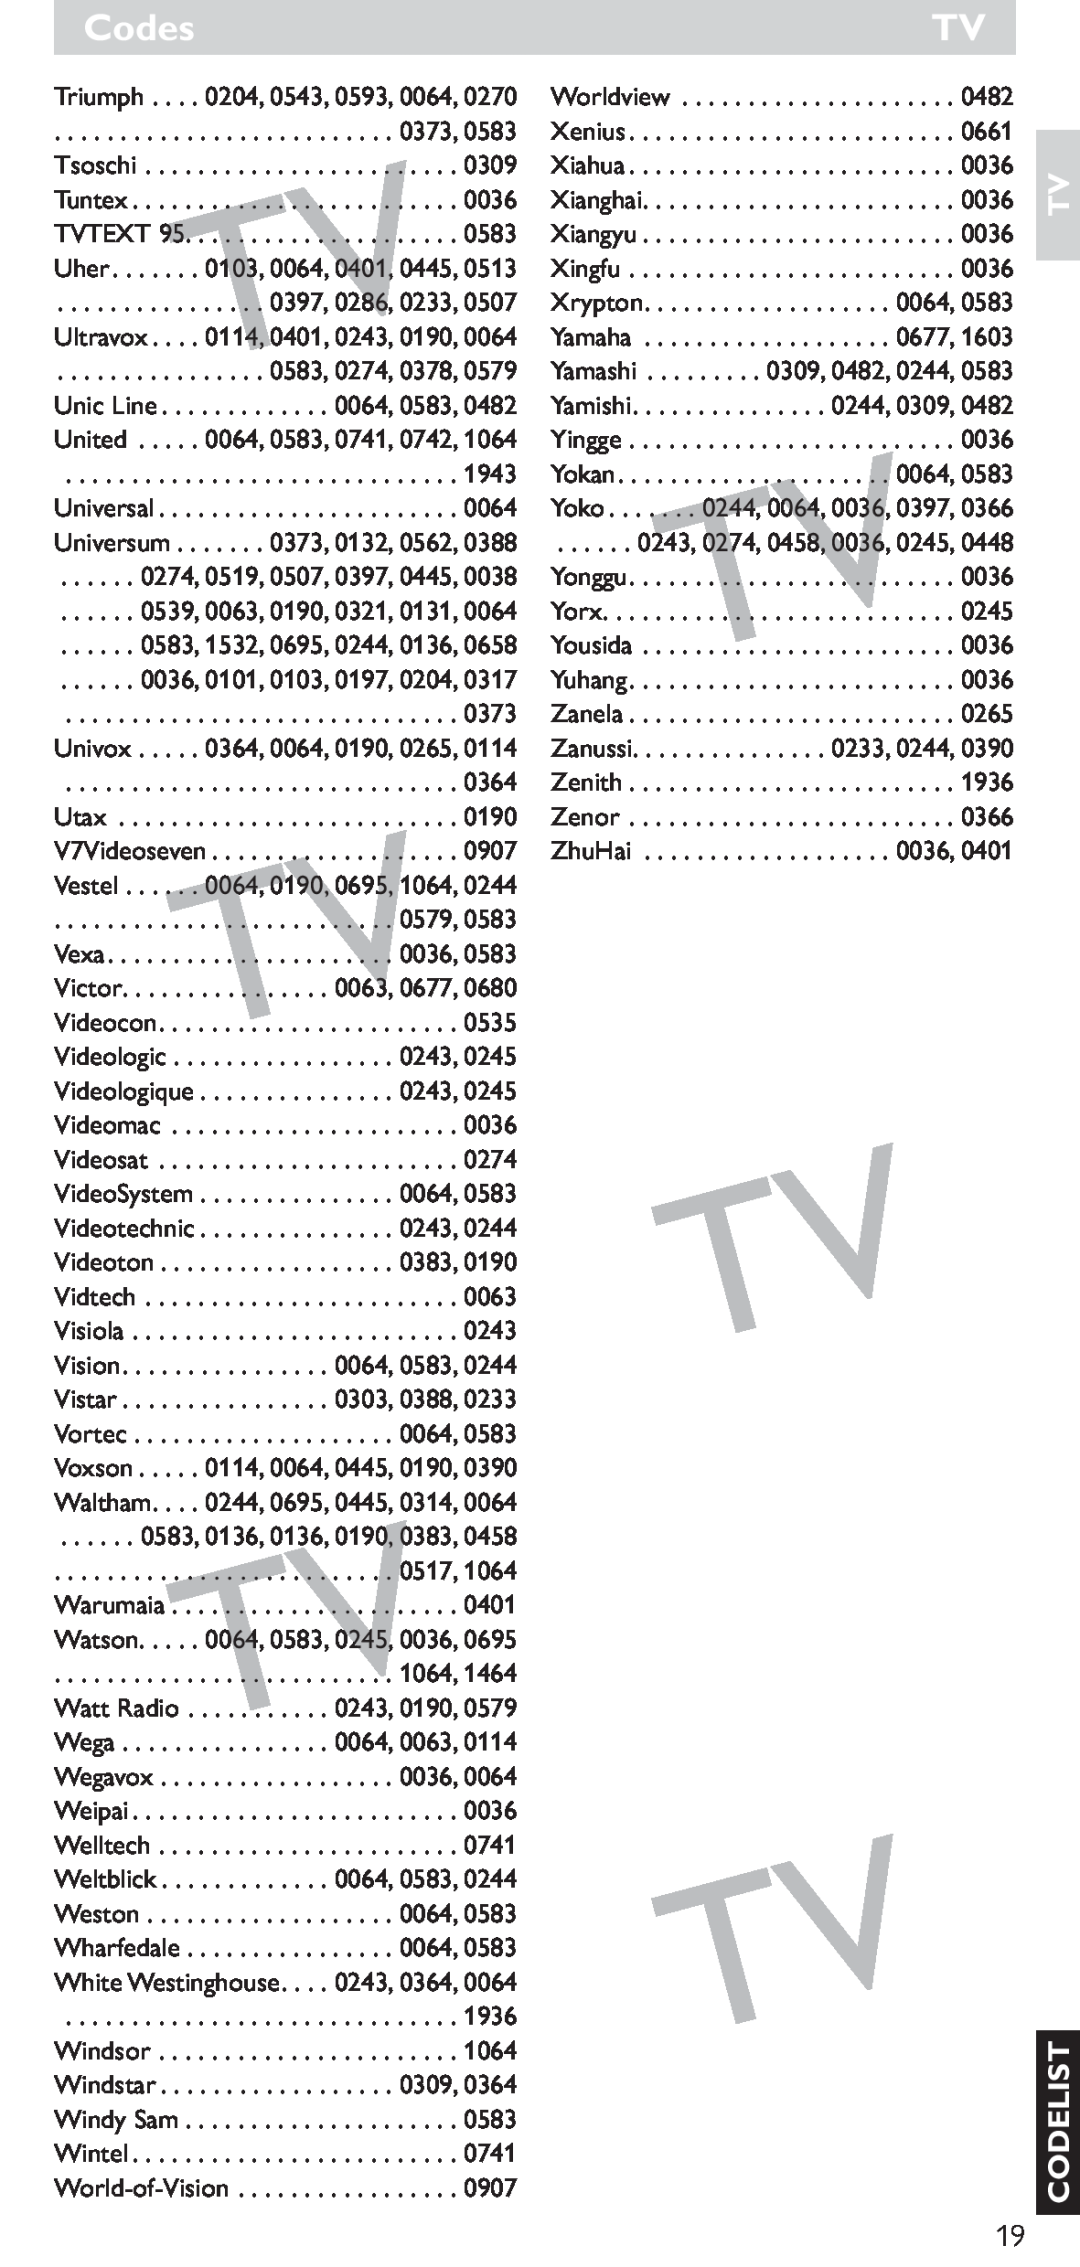 Hitachi SRU 5040/05 manual Tv Tv, Codelist, Codes, Videocon.TV, Watt RadioTV. . . . . . . . . . . 0243, 0190 